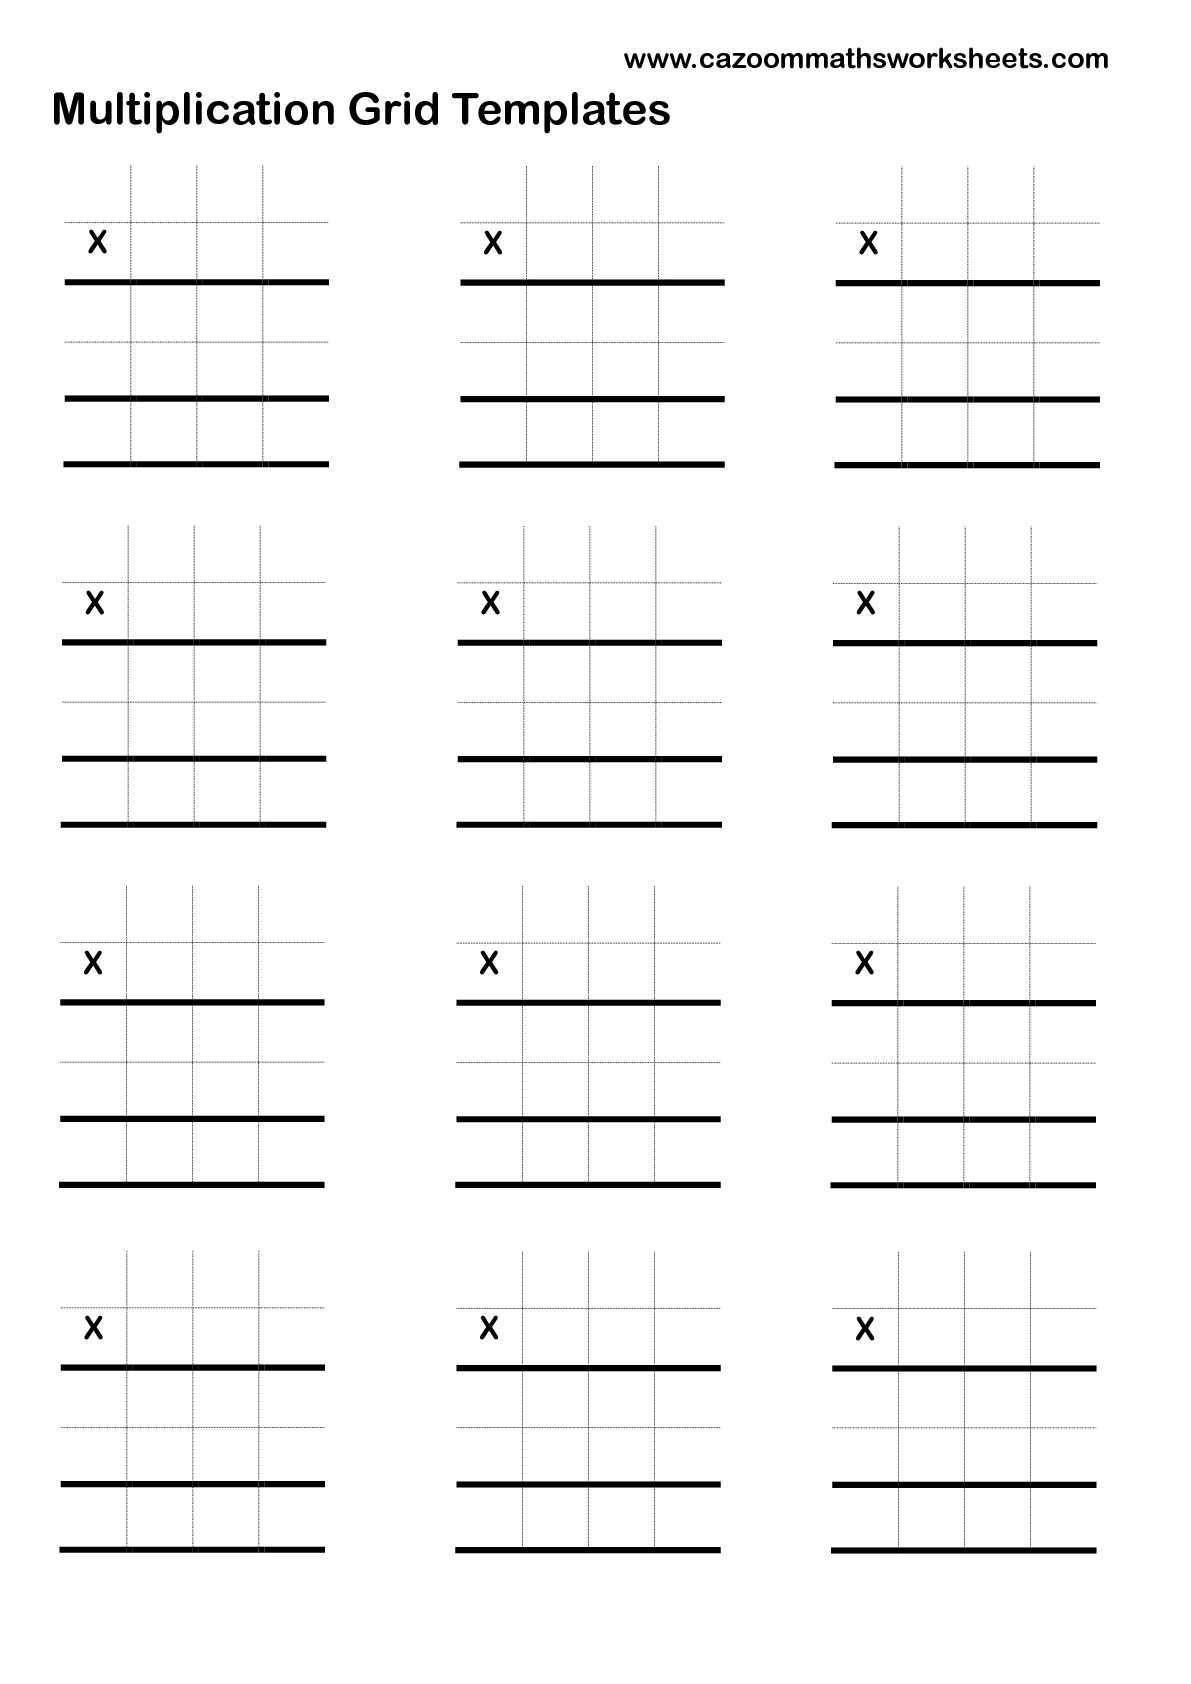 Multiplying Decimals Worksheets 6th Grade as Well as Multiplication Column Method Worksheet Math Worksheets Tes Year 3 4